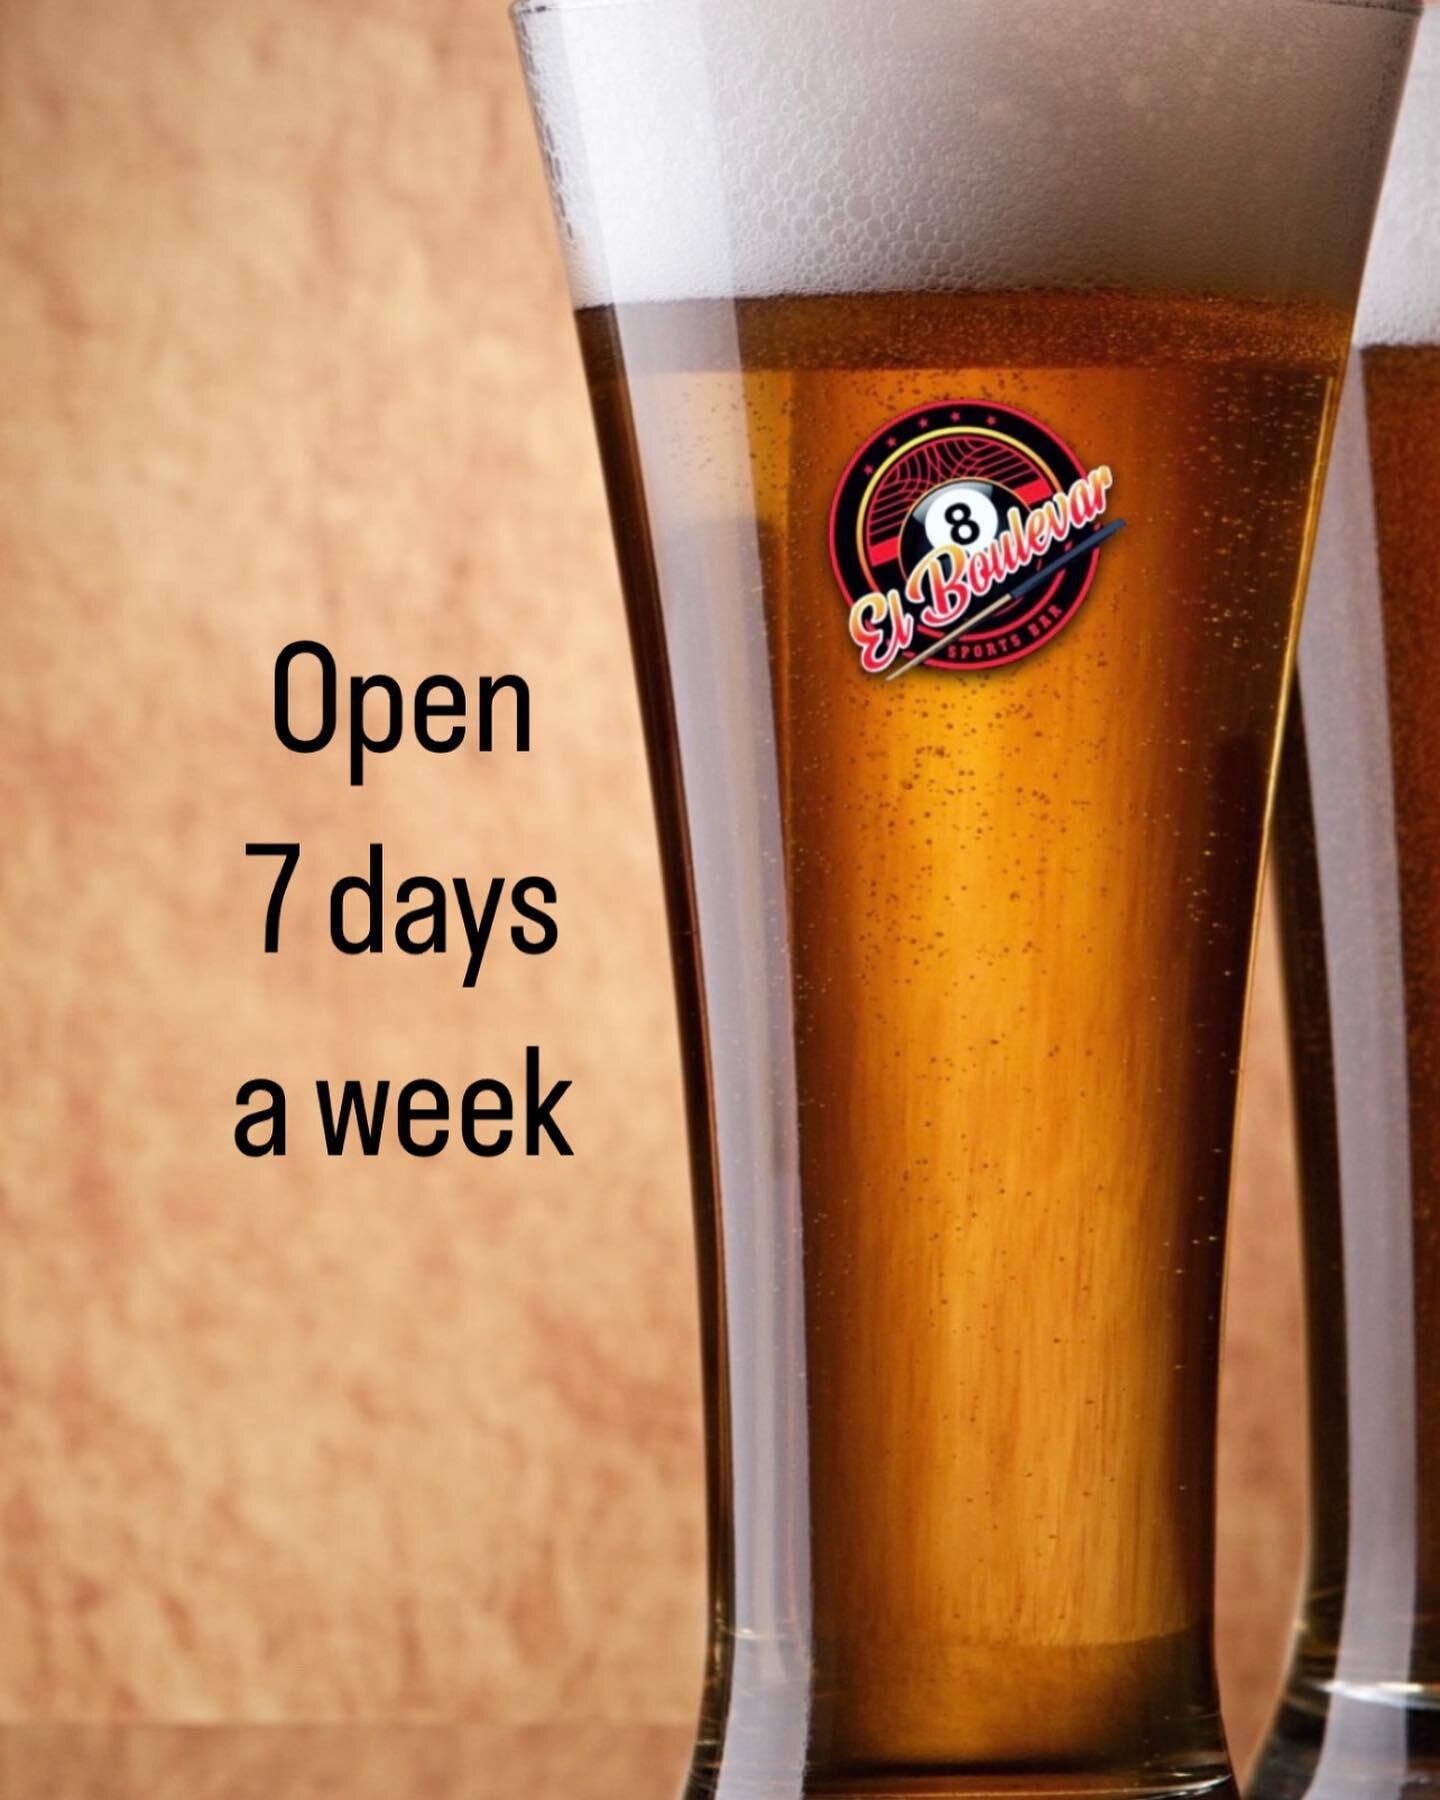 Open 7 days a week!!! 
Abrimos los 7 dias de la semana!!!
@elboulevarsportsbar 
#elboulevar#blvd##whittierblvd#beer#cerveza#bar#sportsbar#localbar#cervezeria#elboulevarsportsbar#open7daysaweek#explorepgae#losangelessportsbar